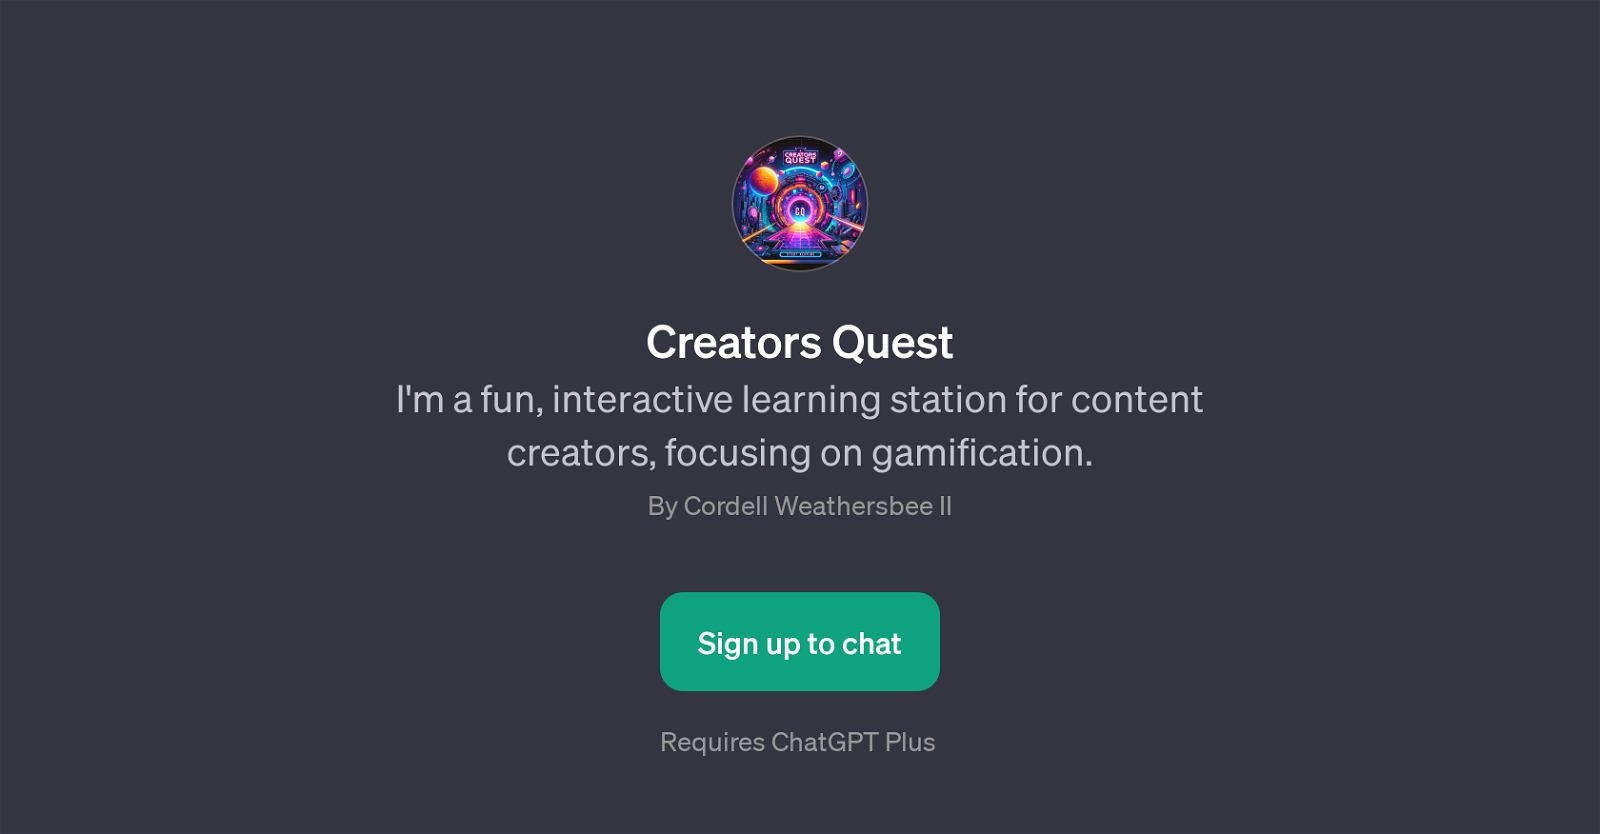 Creators Quest website